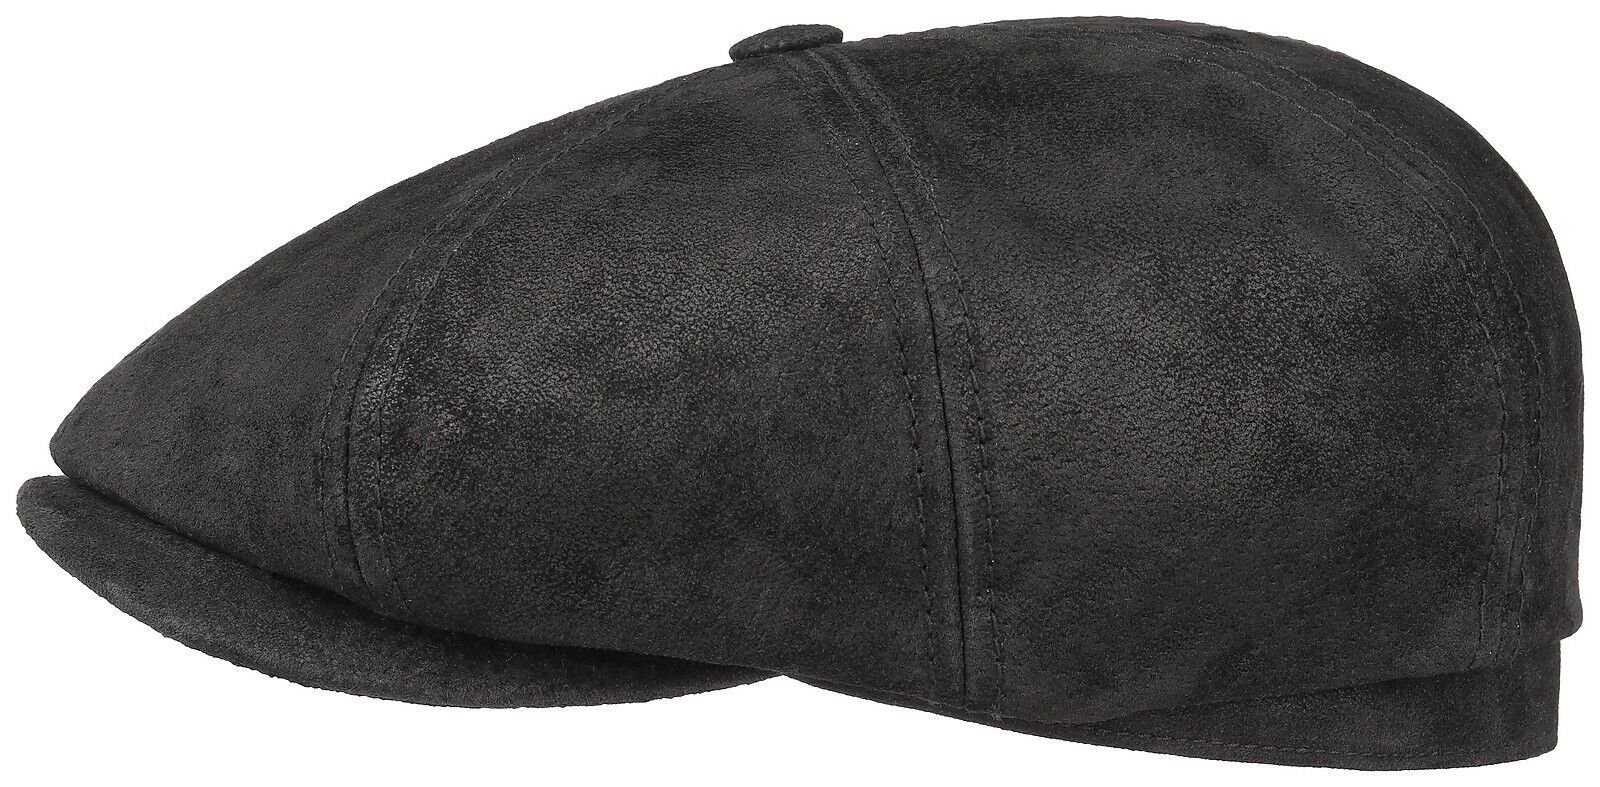 Stetson Ballonmütze Hatteras Pigskin Leder aus 100% Leder